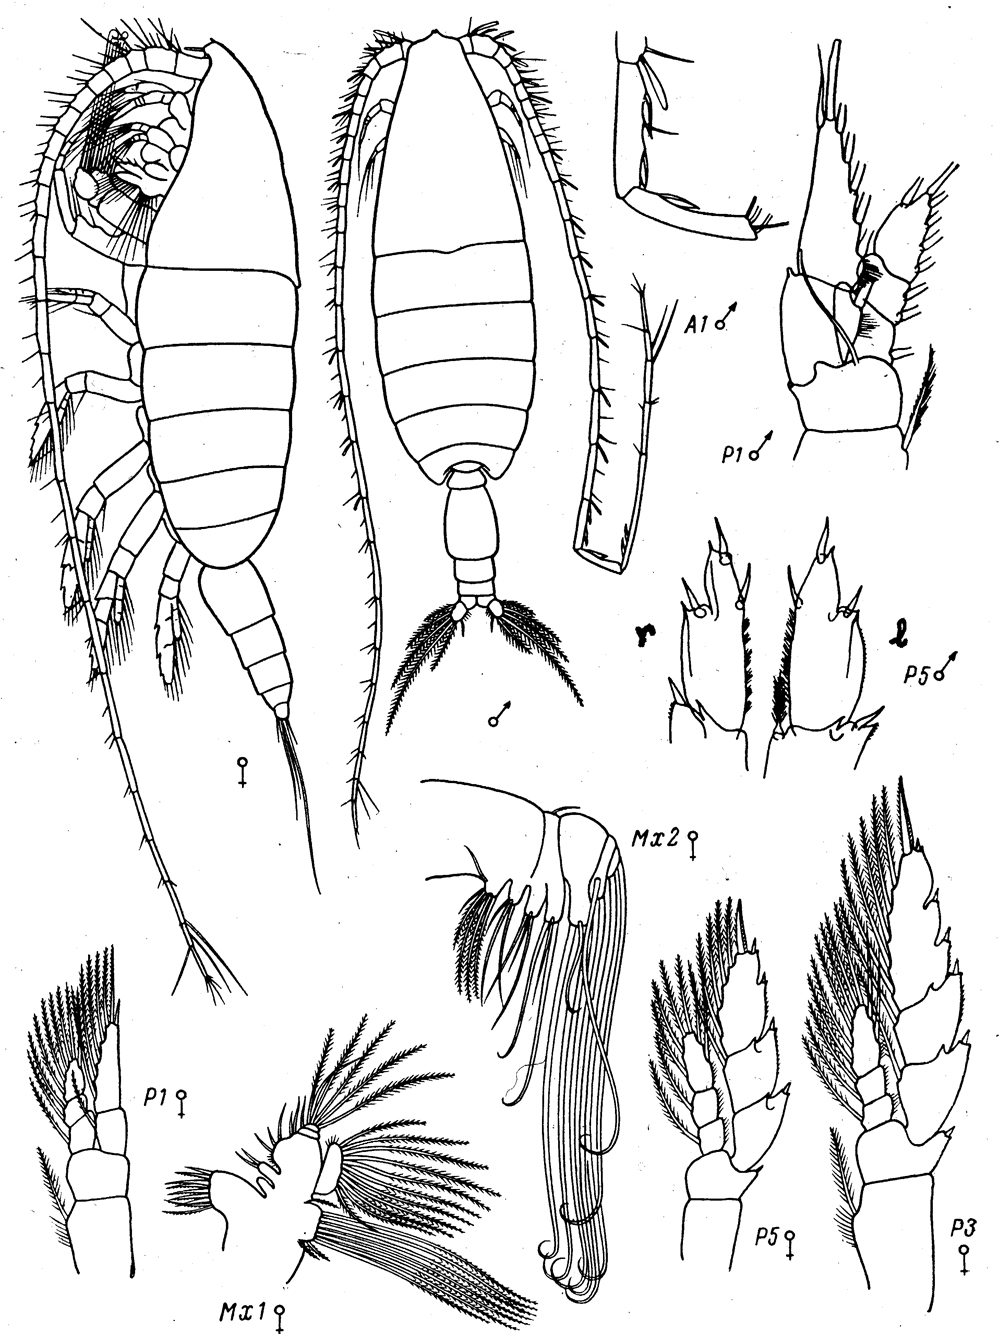 Species Bathycalanus richardi - Plate 7 of morphological figures